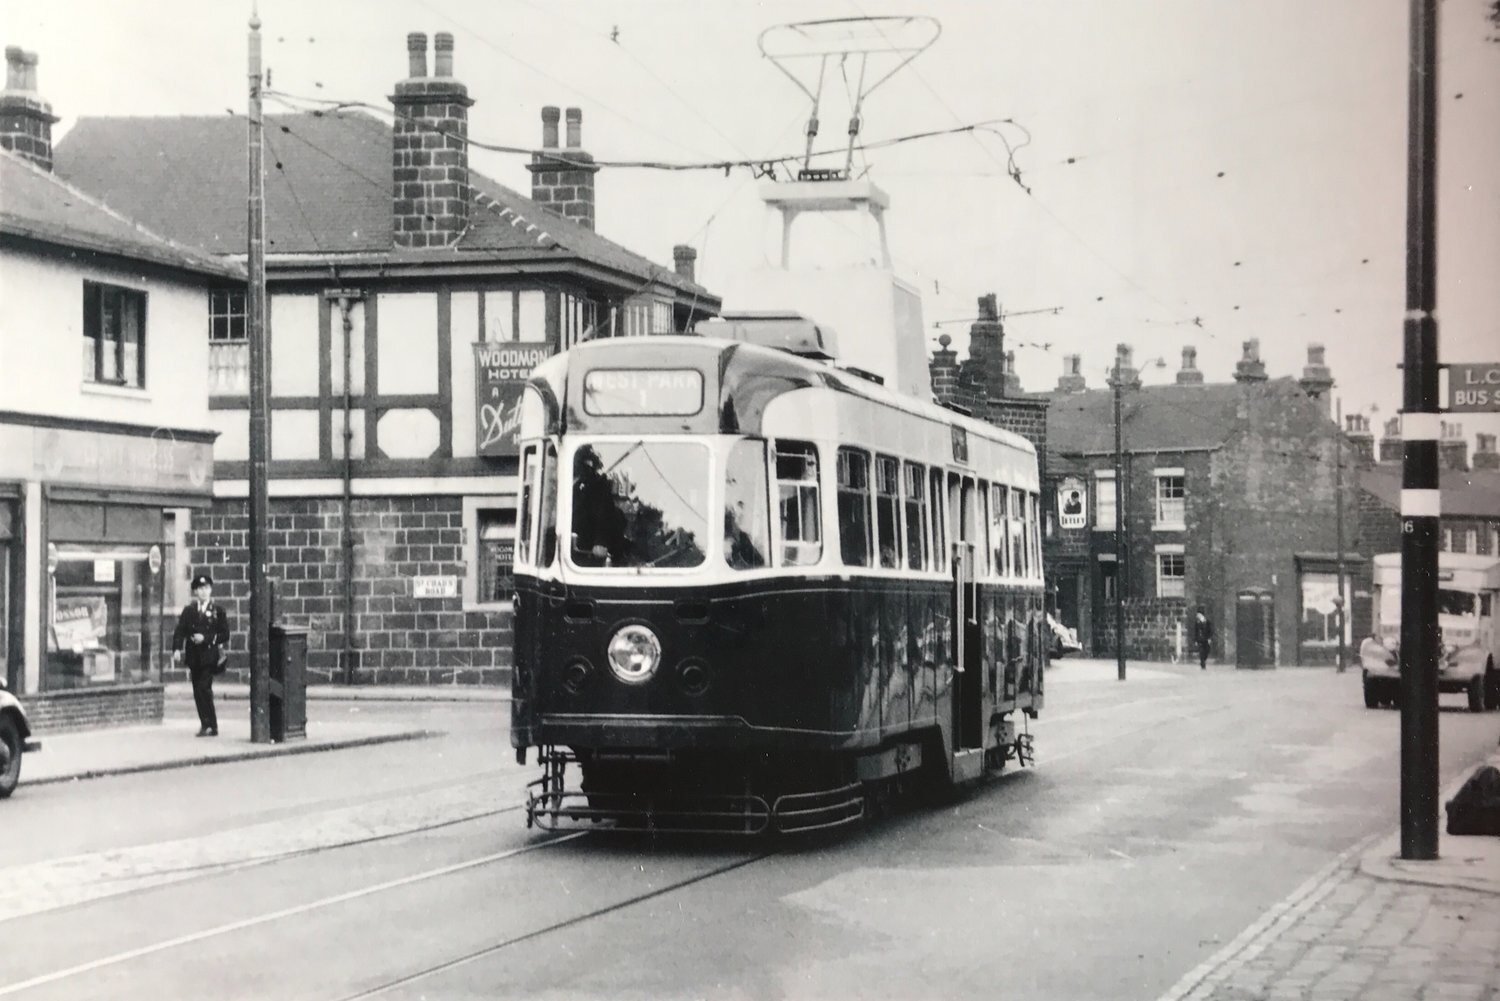 Railcar 601, route 1, destination West Park, passing the Woodman Hotel, Otley Road, 1953